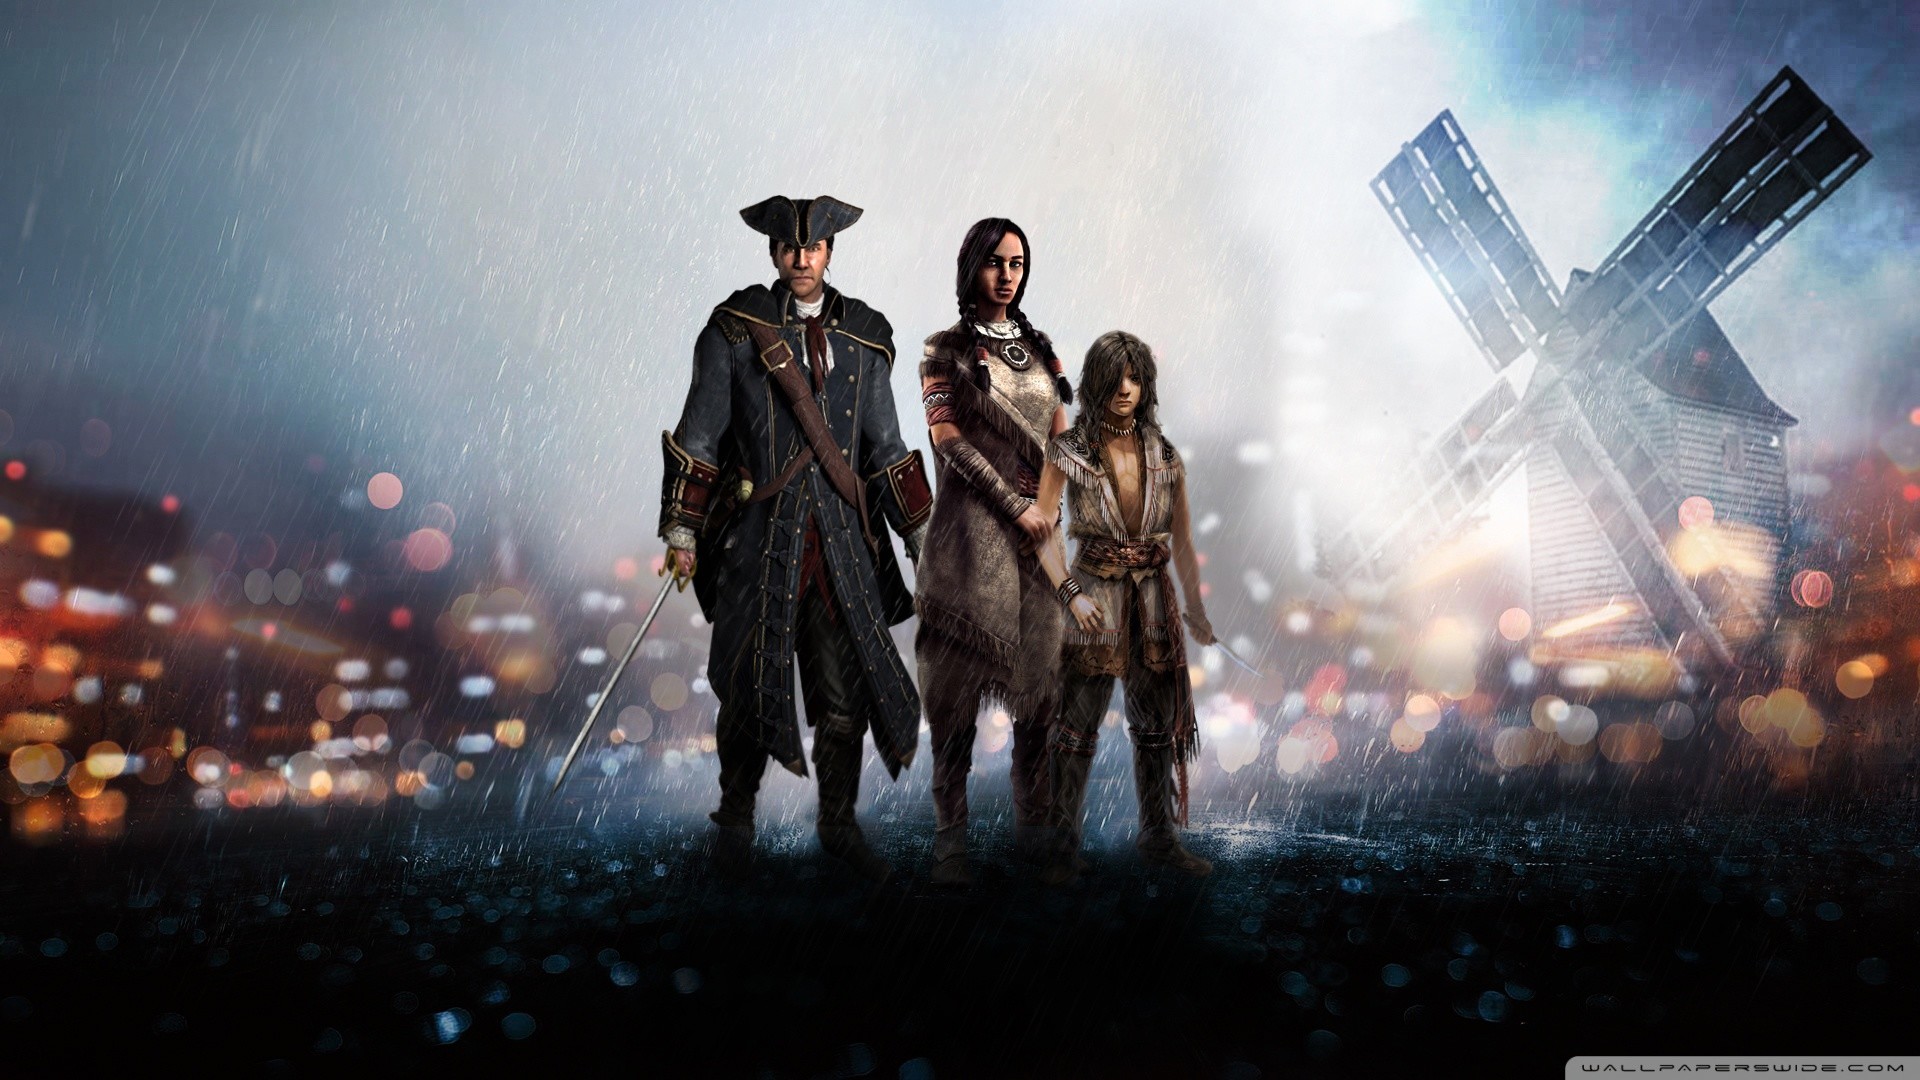 Wallpaper ID 379191  Video Game Assassins Creed III Phone Wallpaper   1080x2160 free download